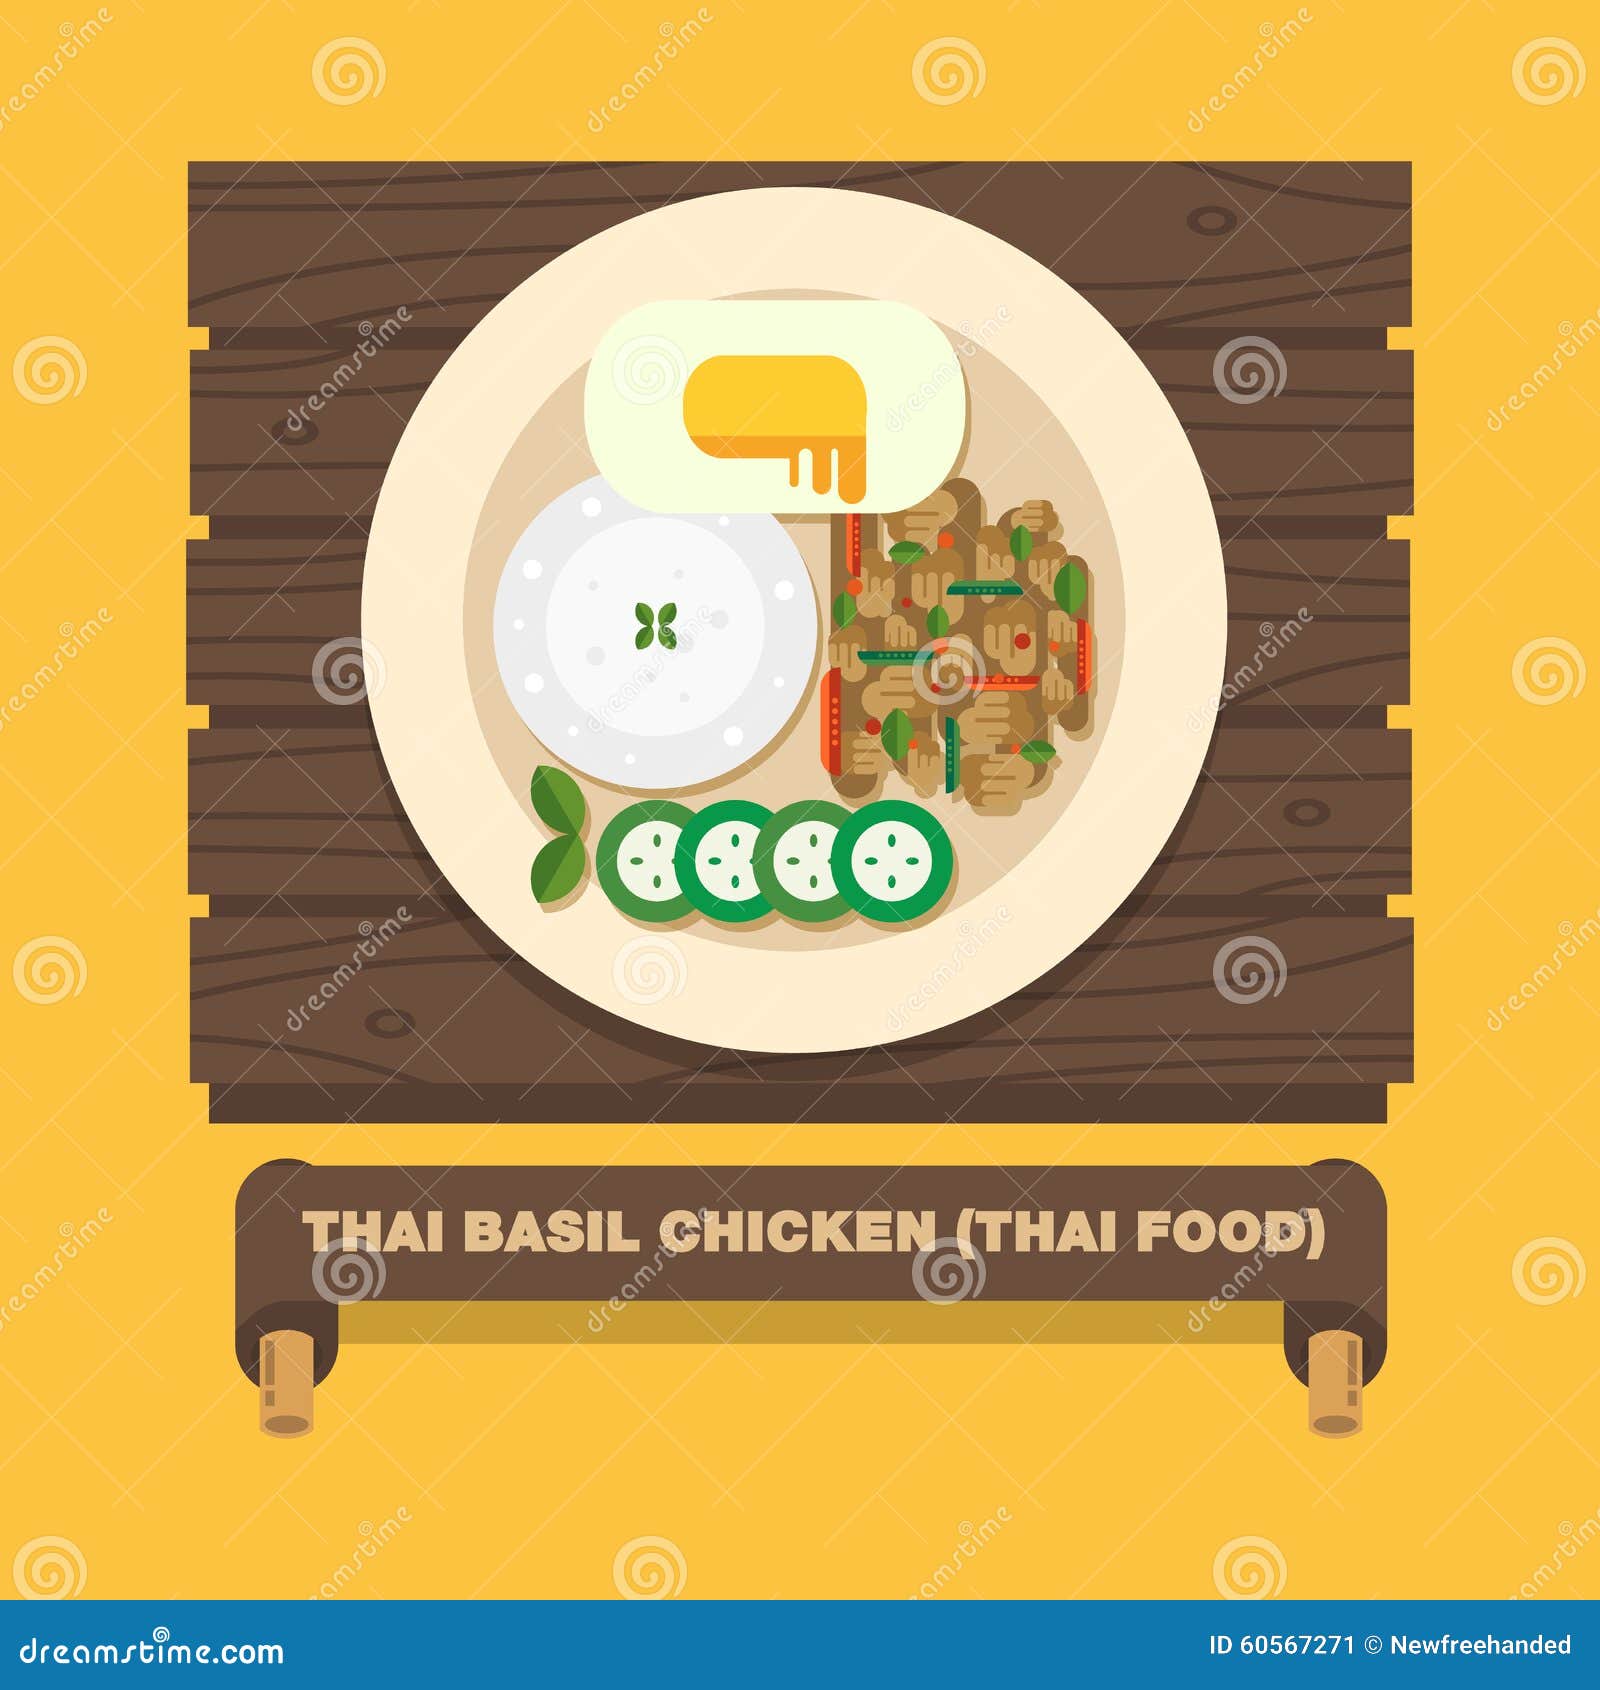 thailand's national dishes,thai basil chicken (pad kra pao gai)